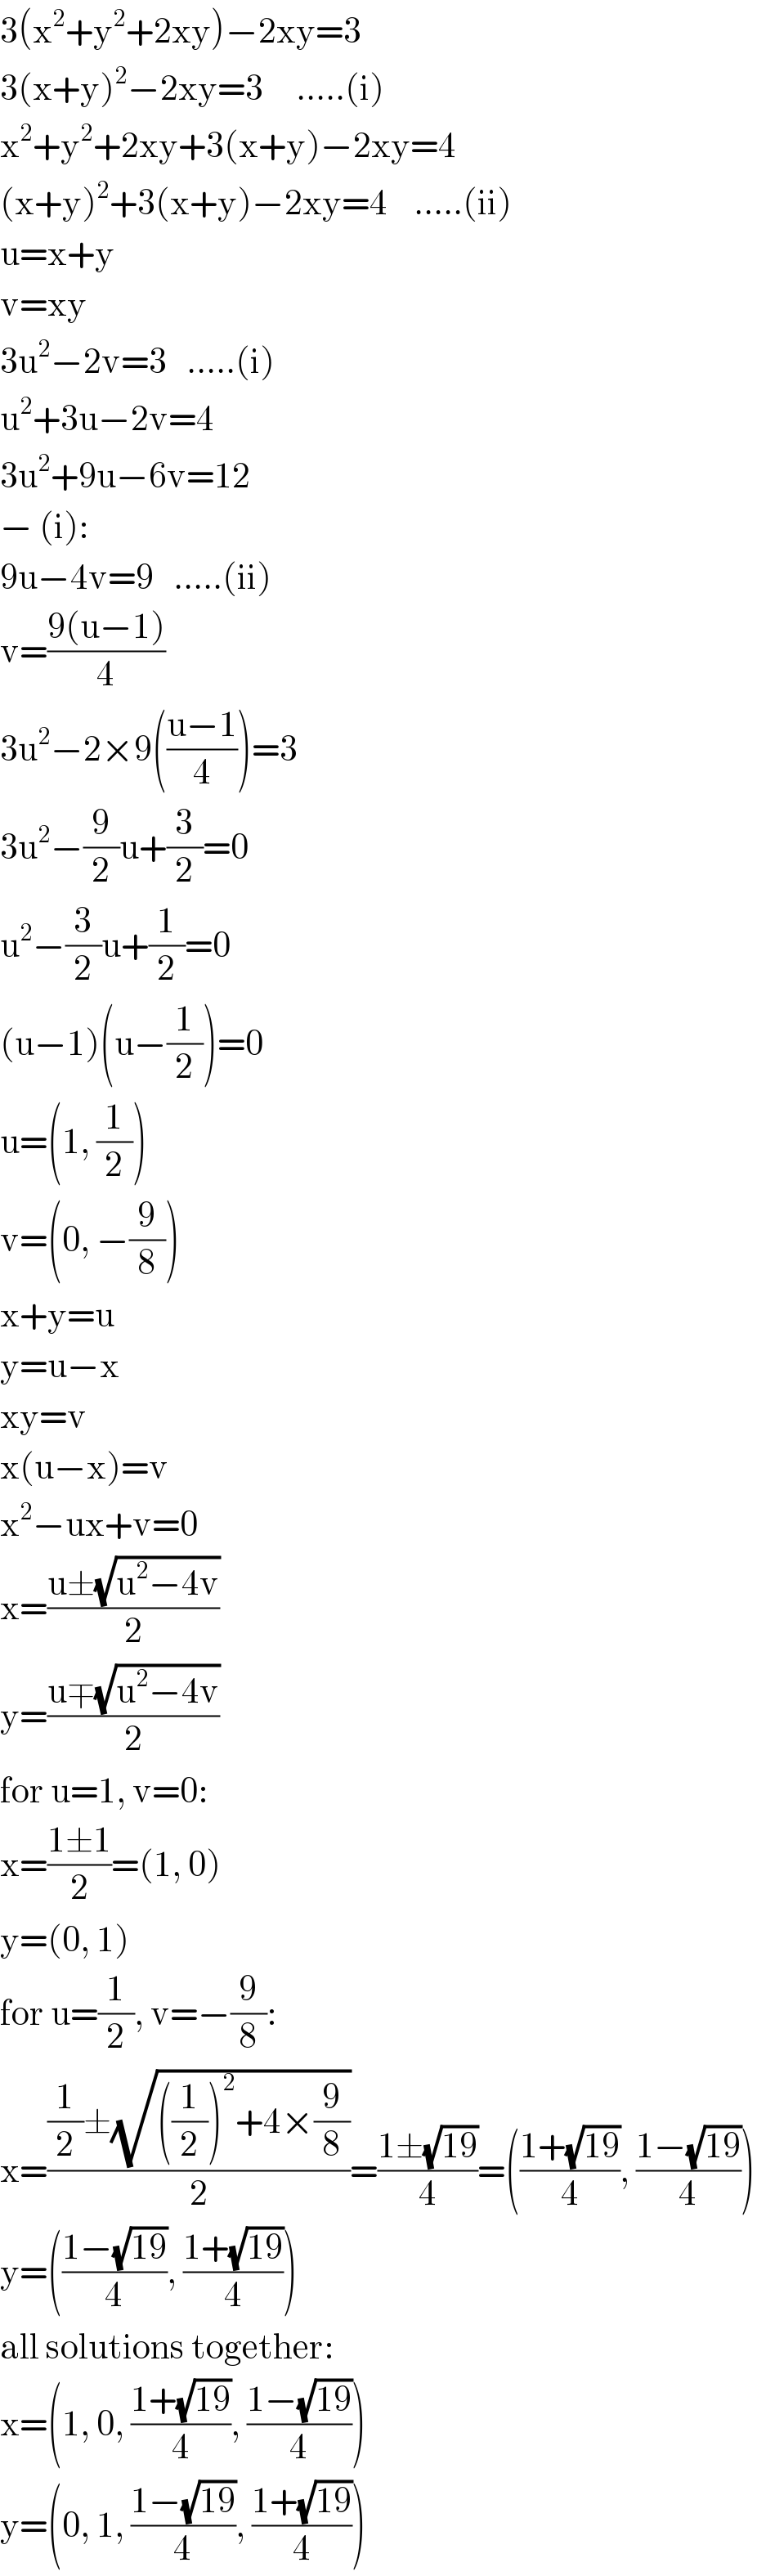 3(x^2 +y^2 +2xy)−2xy=3  3(x+y)^2 −2xy=3     .....(i)  x^2 +y^2 +2xy+3(x+y)−2xy=4  (x+y)^2 +3(x+y)−2xy=4    .....(ii)  u=x+y  v=xy  3u^2 −2v=3   .....(i)  u^2 +3u−2v=4  3u^2 +9u−6v=12  − (i):  9u−4v=9   .....(ii)  v=((9(u−1))/4)  3u^2 −2×9(((u−1)/4))=3  3u^2 −(9/2)u+(3/2)=0  u^2 −(3/2)u+(1/2)=0  (u−1)(u−(1/2))=0  u=(1, (1/2))  v=(0, −(9/8))  x+y=u  y=u−x  xy=v  x(u−x)=v  x^2 −ux+v=0  x=((u±(√(u^2 −4v)))/2)  y=((u∓(√(u^2 −4v)))/2)  for u=1, v=0:  x=((1±1)/2)=(1, 0)  y=(0, 1)  for u=(1/2), v=−(9/8):  x=(((1/2)±(√(((1/2))^2 +4×(9/8))))/2)=((1±(√(19)))/4)=(((1+(√(19)))/4), ((1−(√(19)))/4))  y=(((1−(√(19)))/4), ((1+(√(19)))/4))  all solutions together:  x=(1, 0, ((1+(√(19)))/4), ((1−(√(19)))/4))  y=(0, 1, ((1−(√(19)))/4), ((1+(√(19)))/4))  